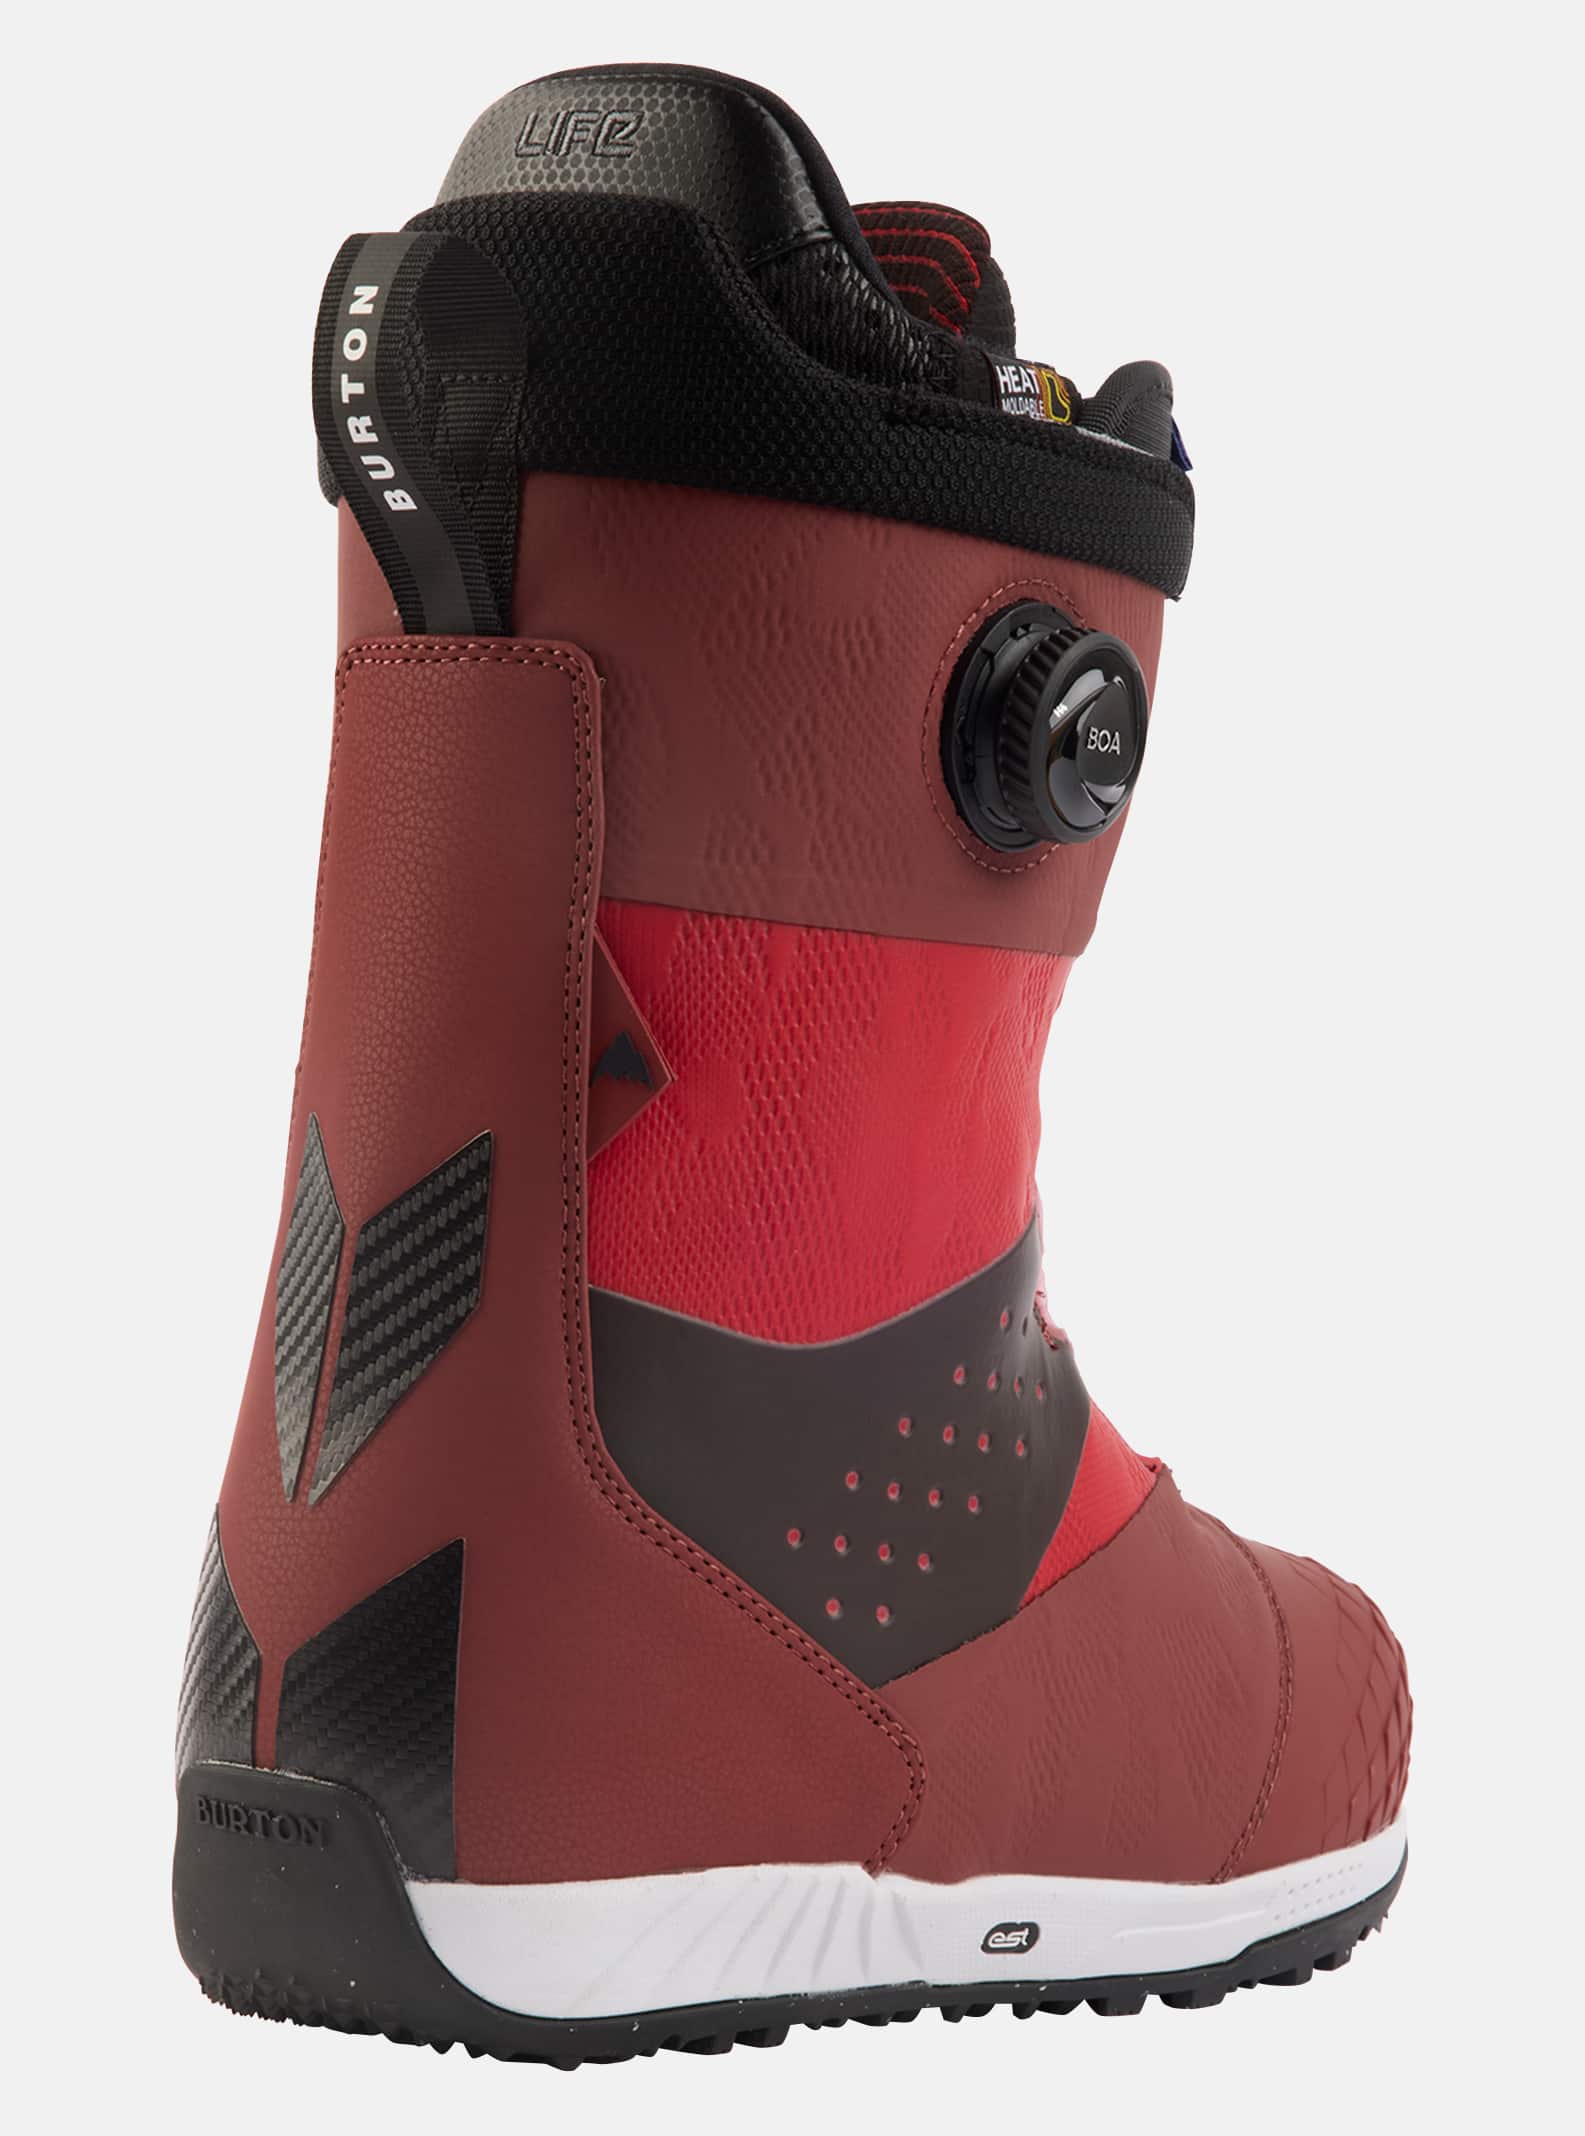 Men's Snowboard Boots | Burton Snowboards FI